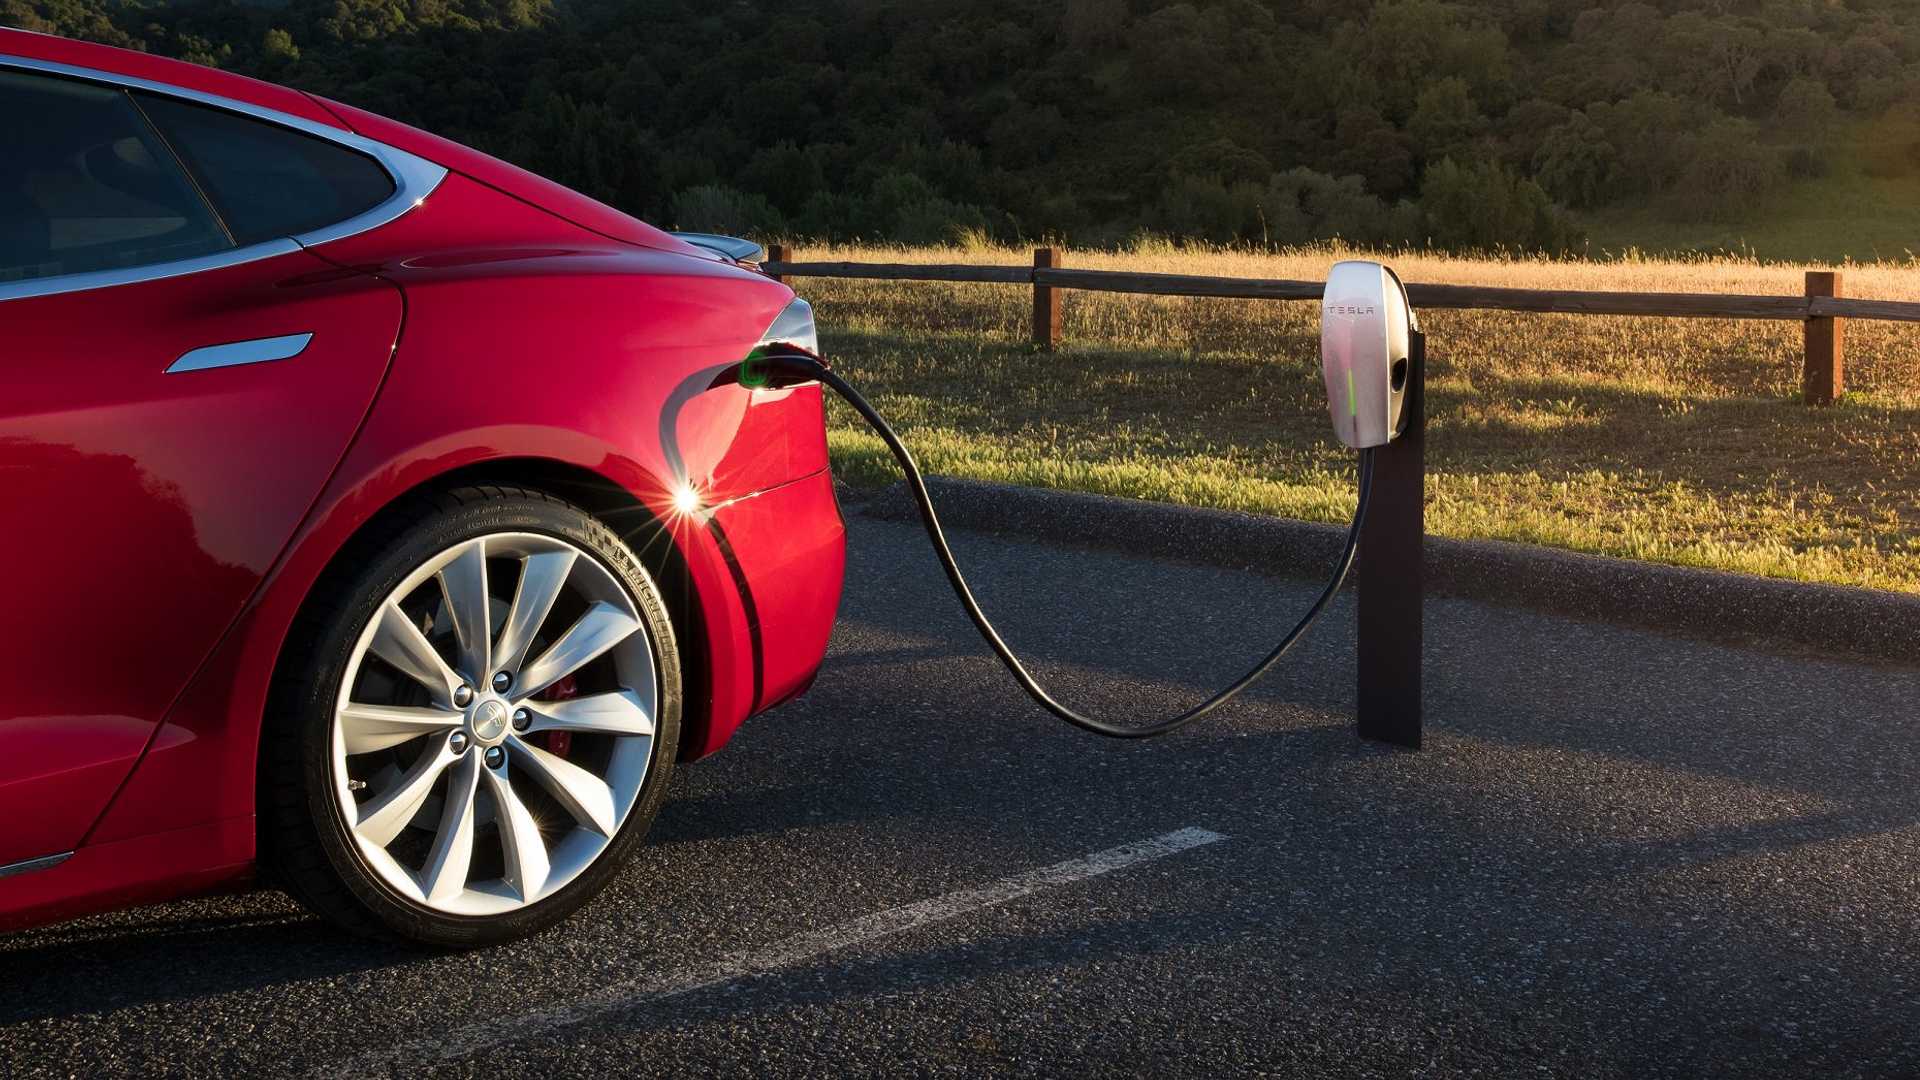 How to charge the Tesla Model S? Tesla Model S charging steps - acetesla